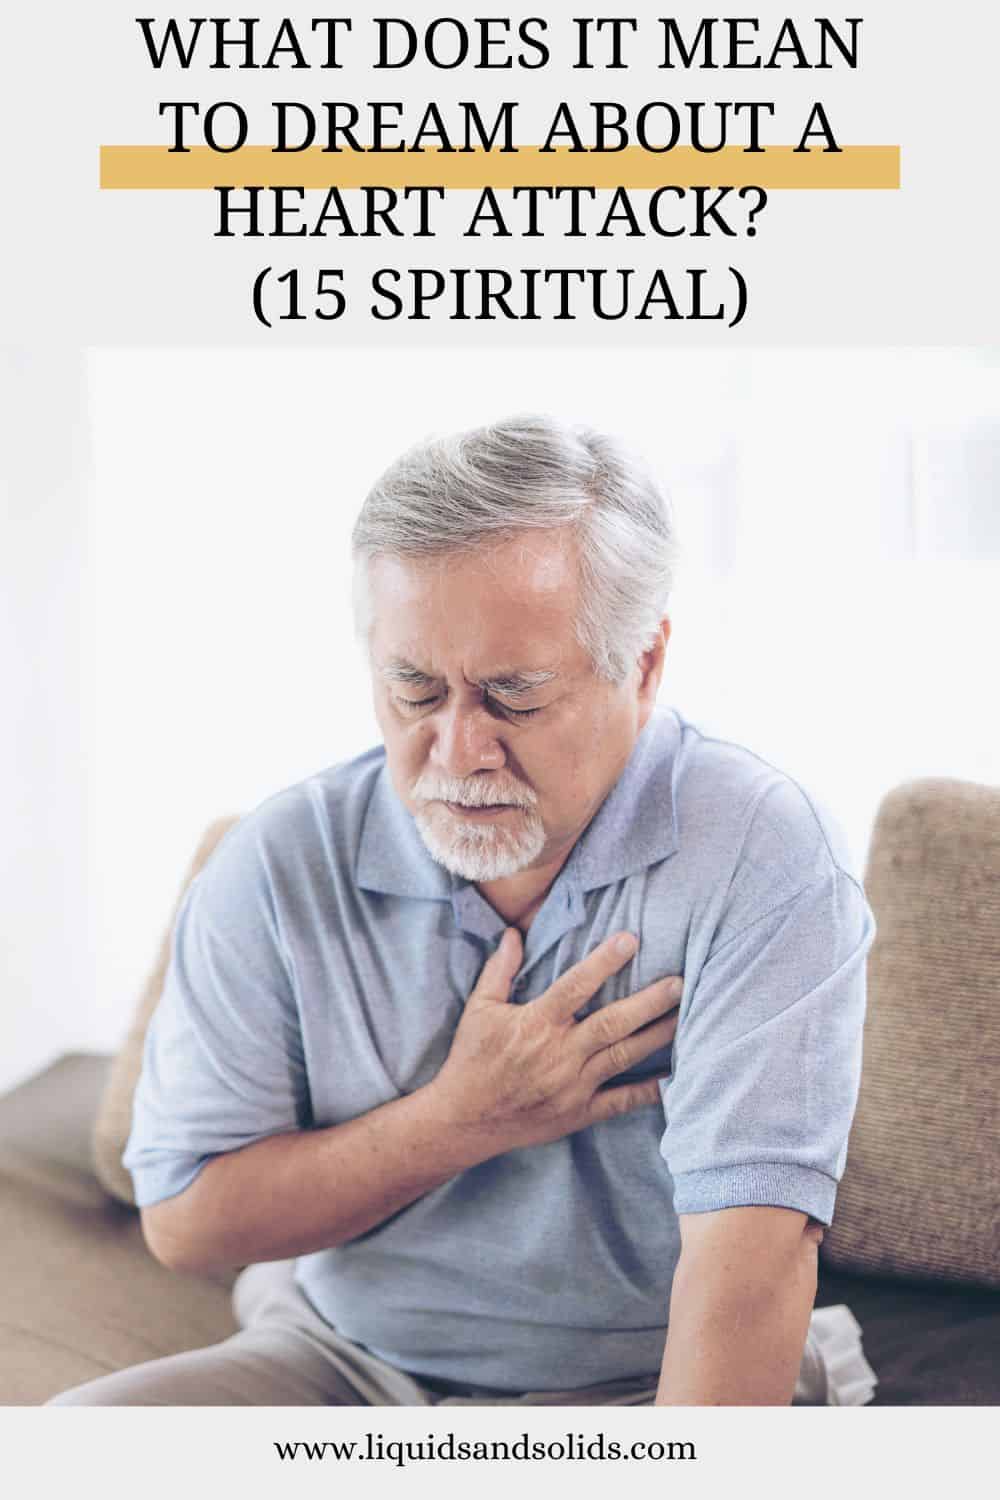  Rêve de crise cardiaque (15 significations spirituelles)